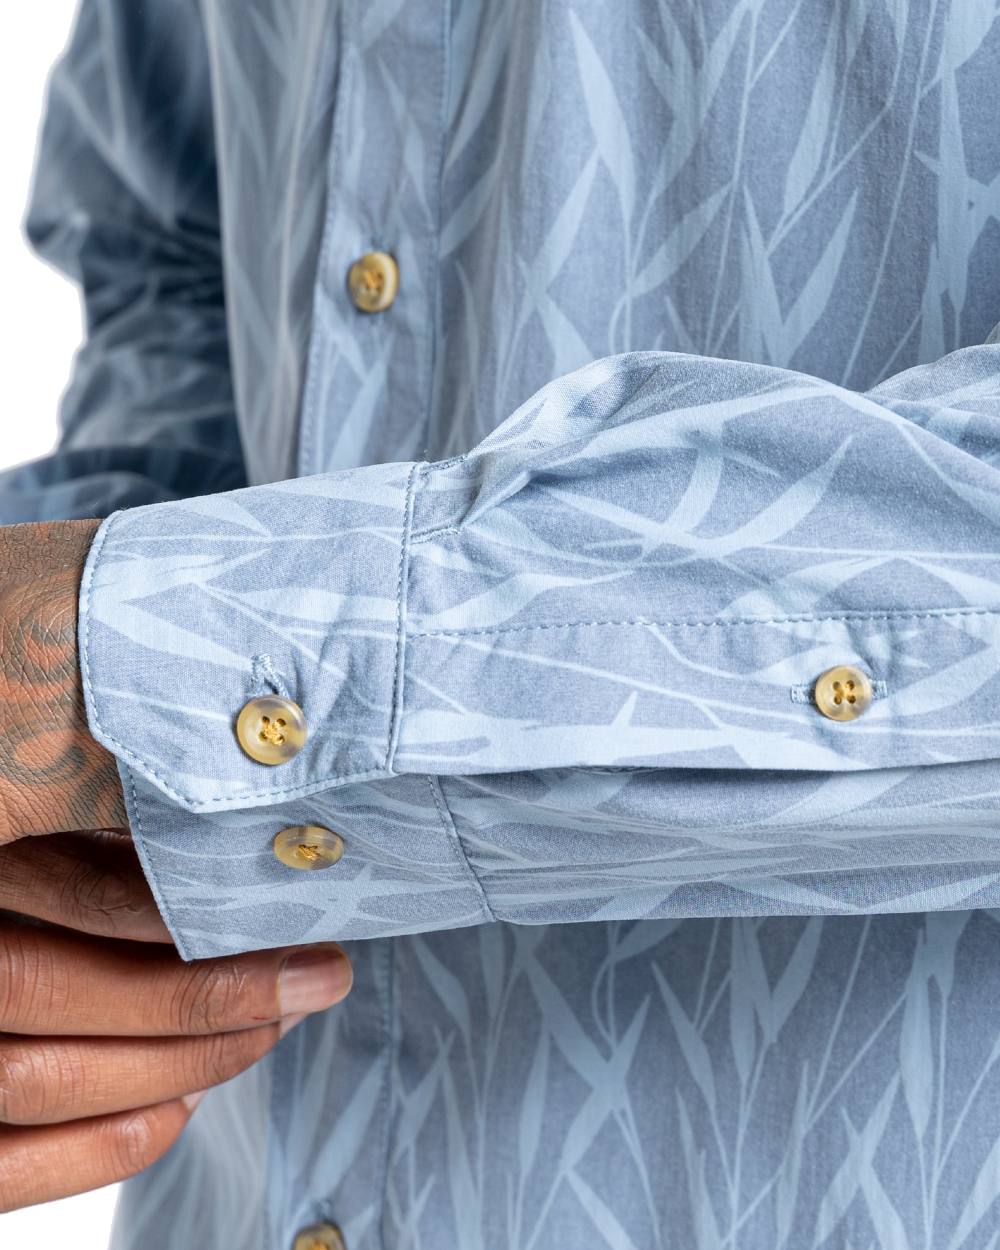 Salton Blue Print Coloured Craghoppers Mens NosiLife Pinyon Long Sleeved Shirt On A White Background 